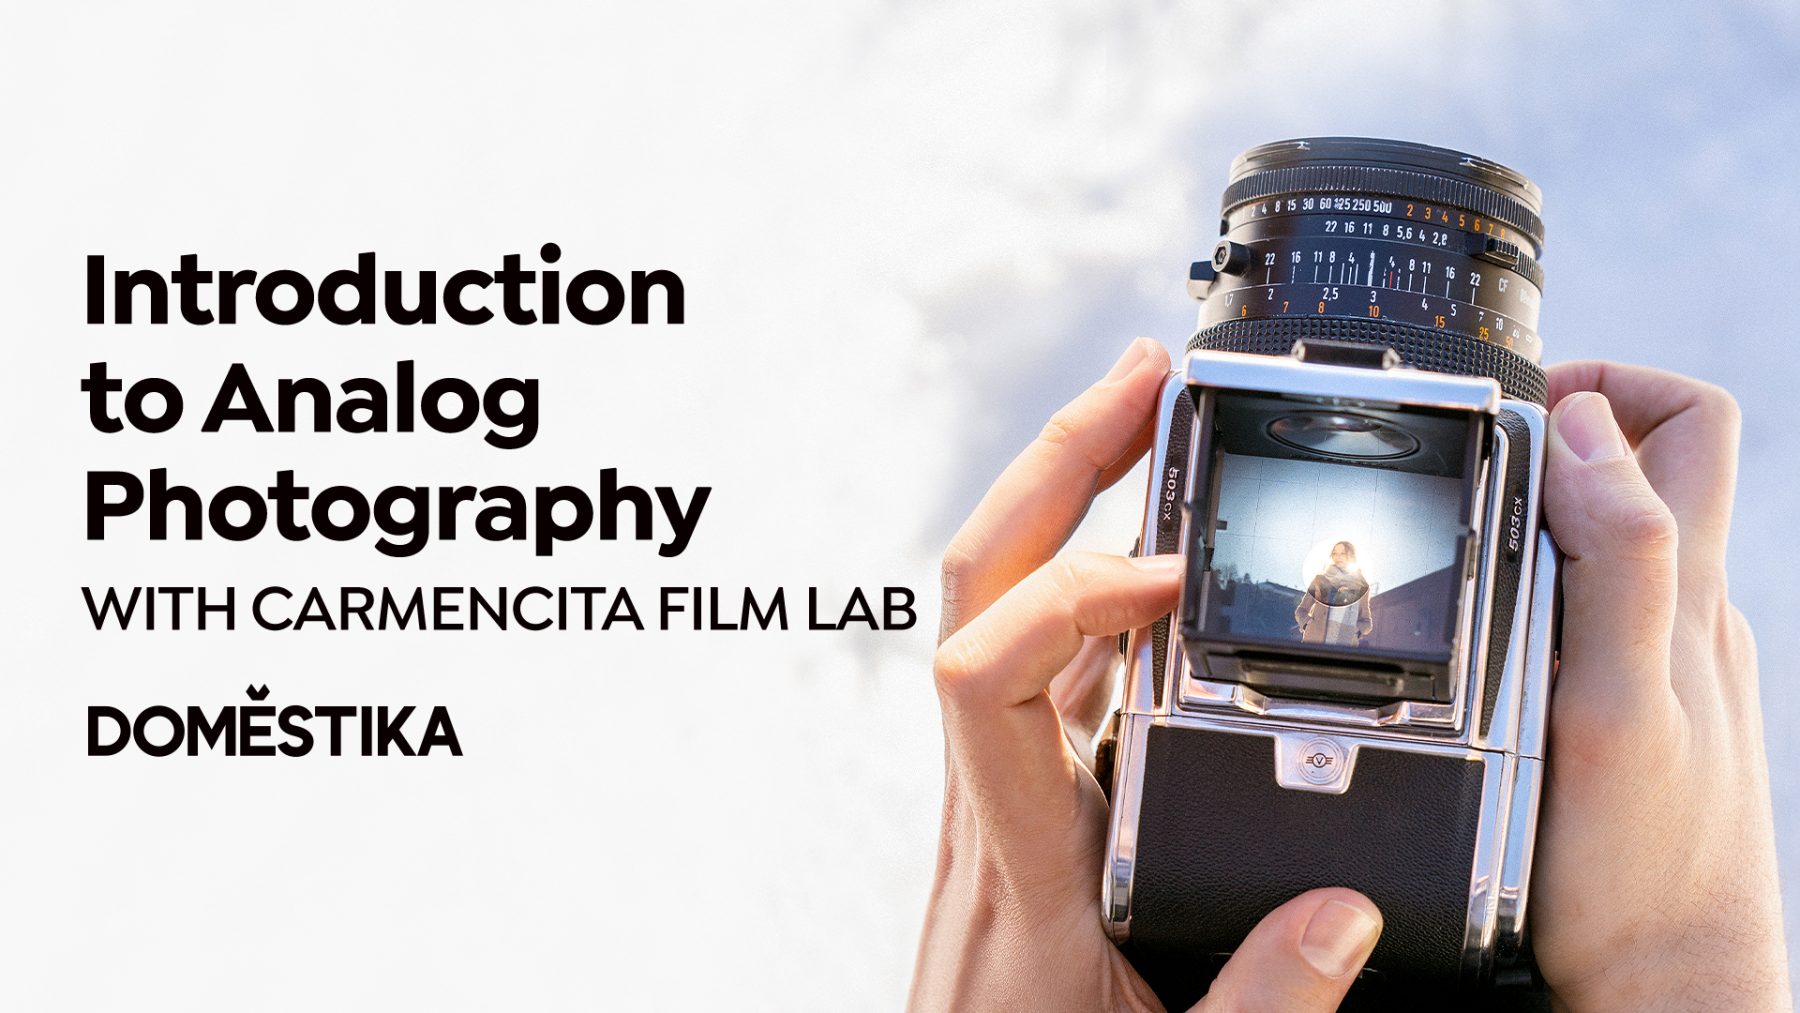 CARMENCITA x DOMESTIKA. Introduction to Film Photography Course